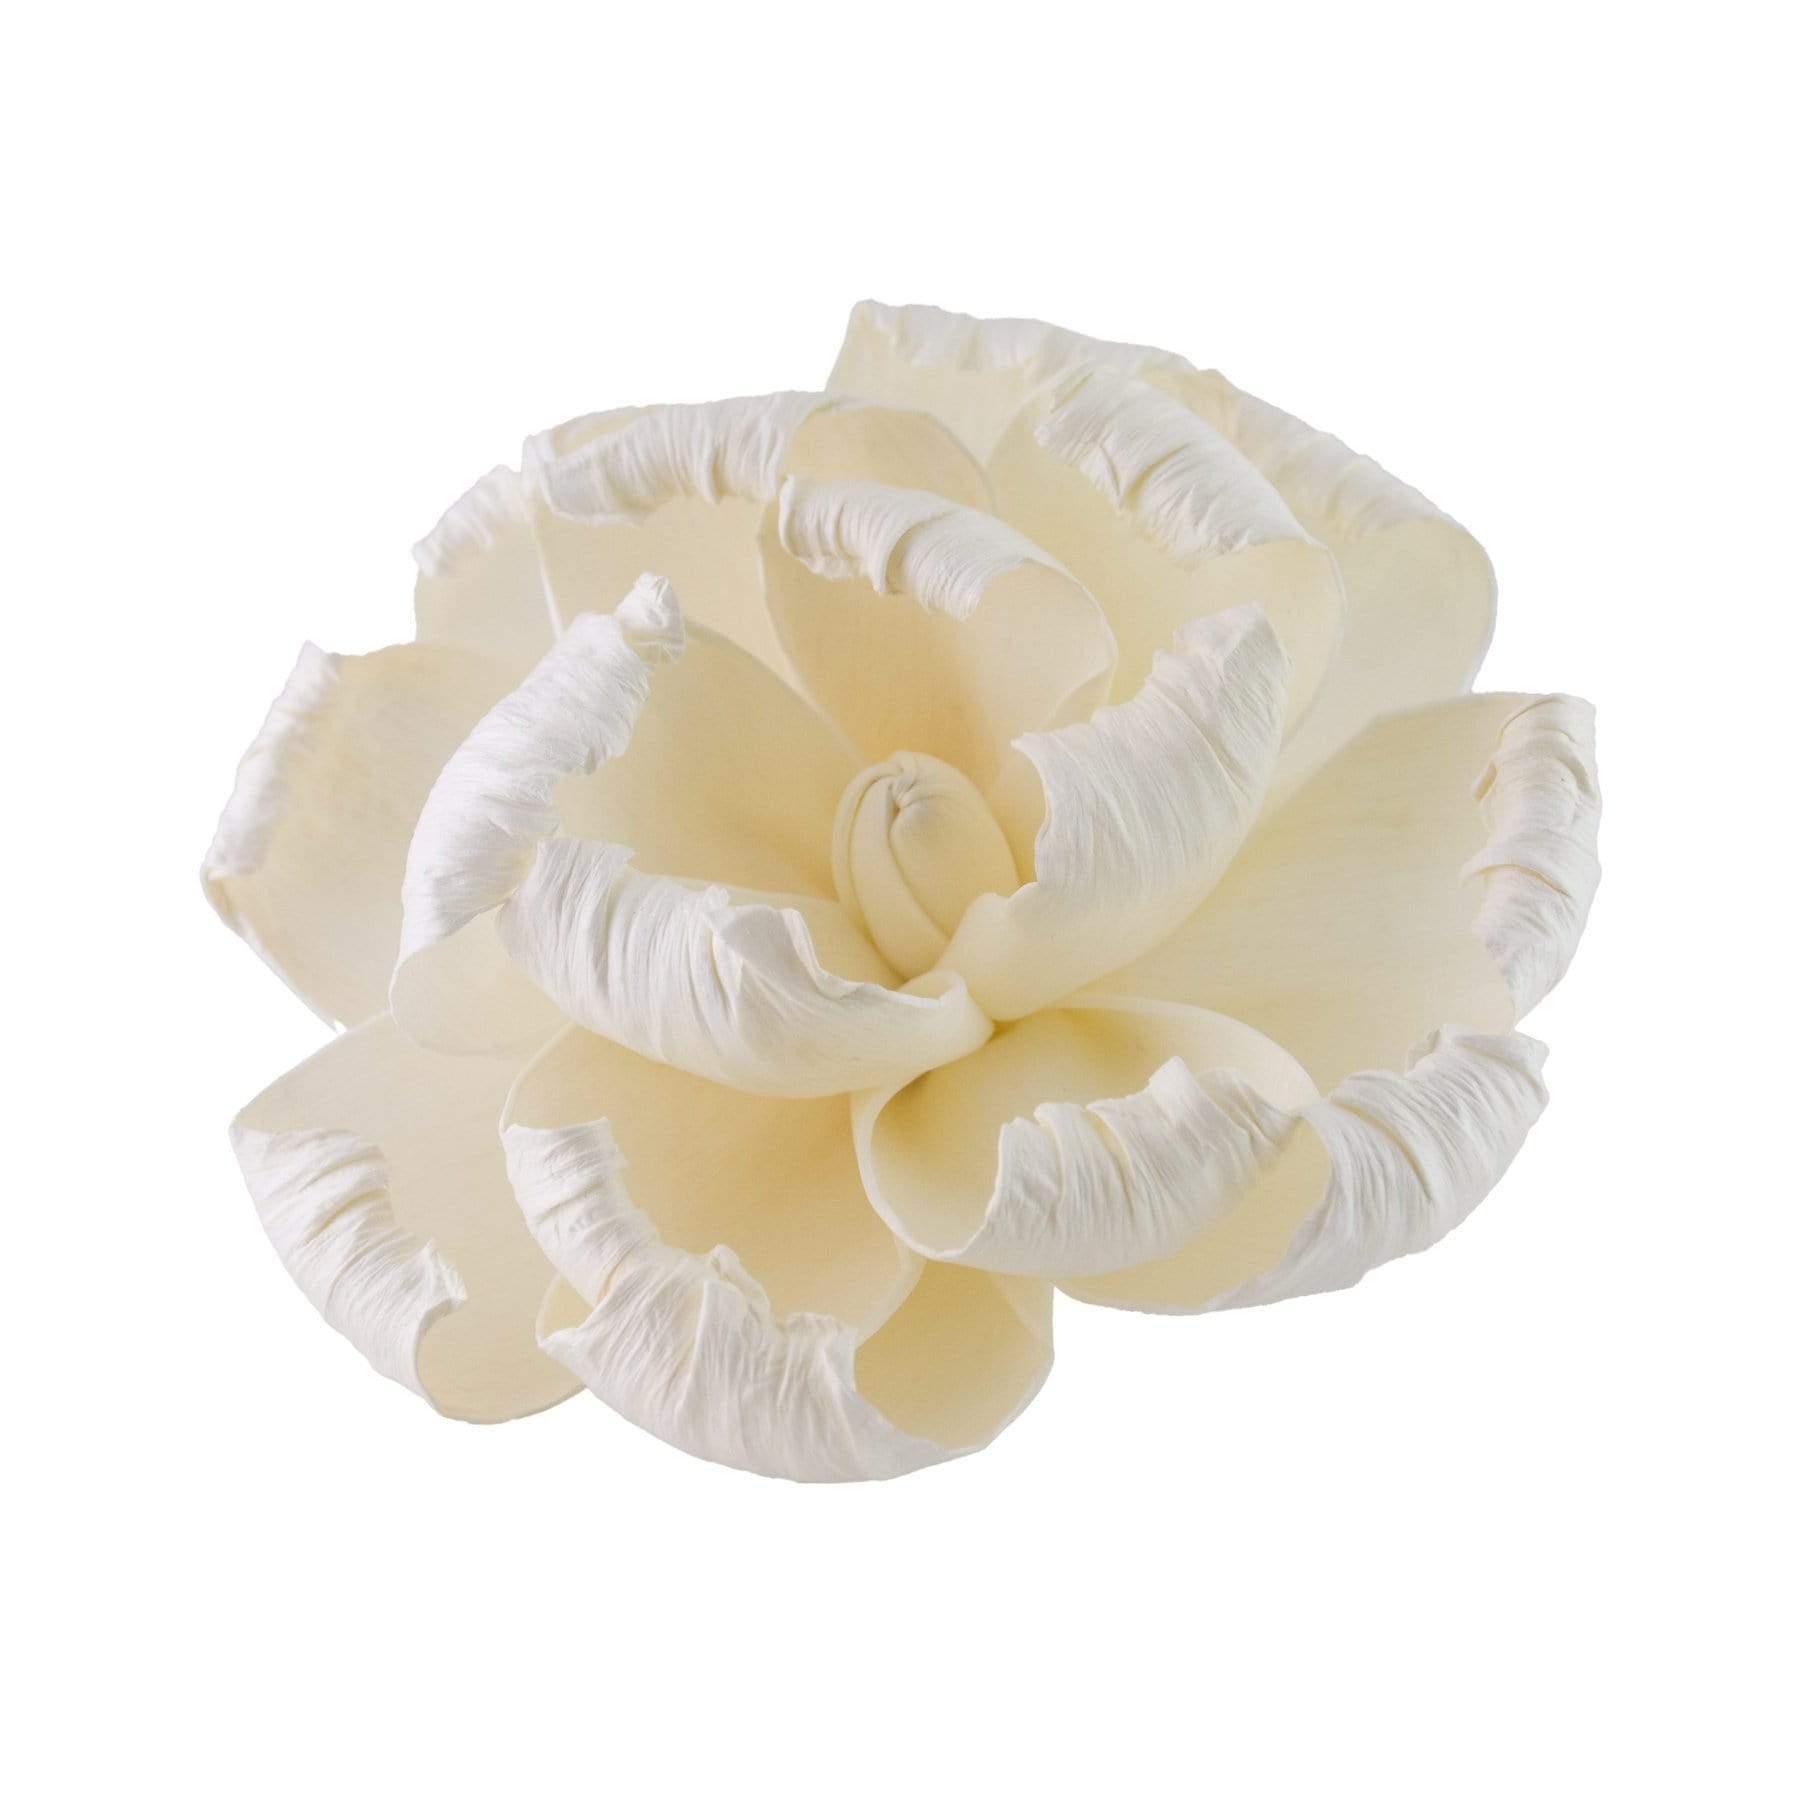 HYSSES Home Scents 5" Solar Flower Diffuser Refill - Magnolia